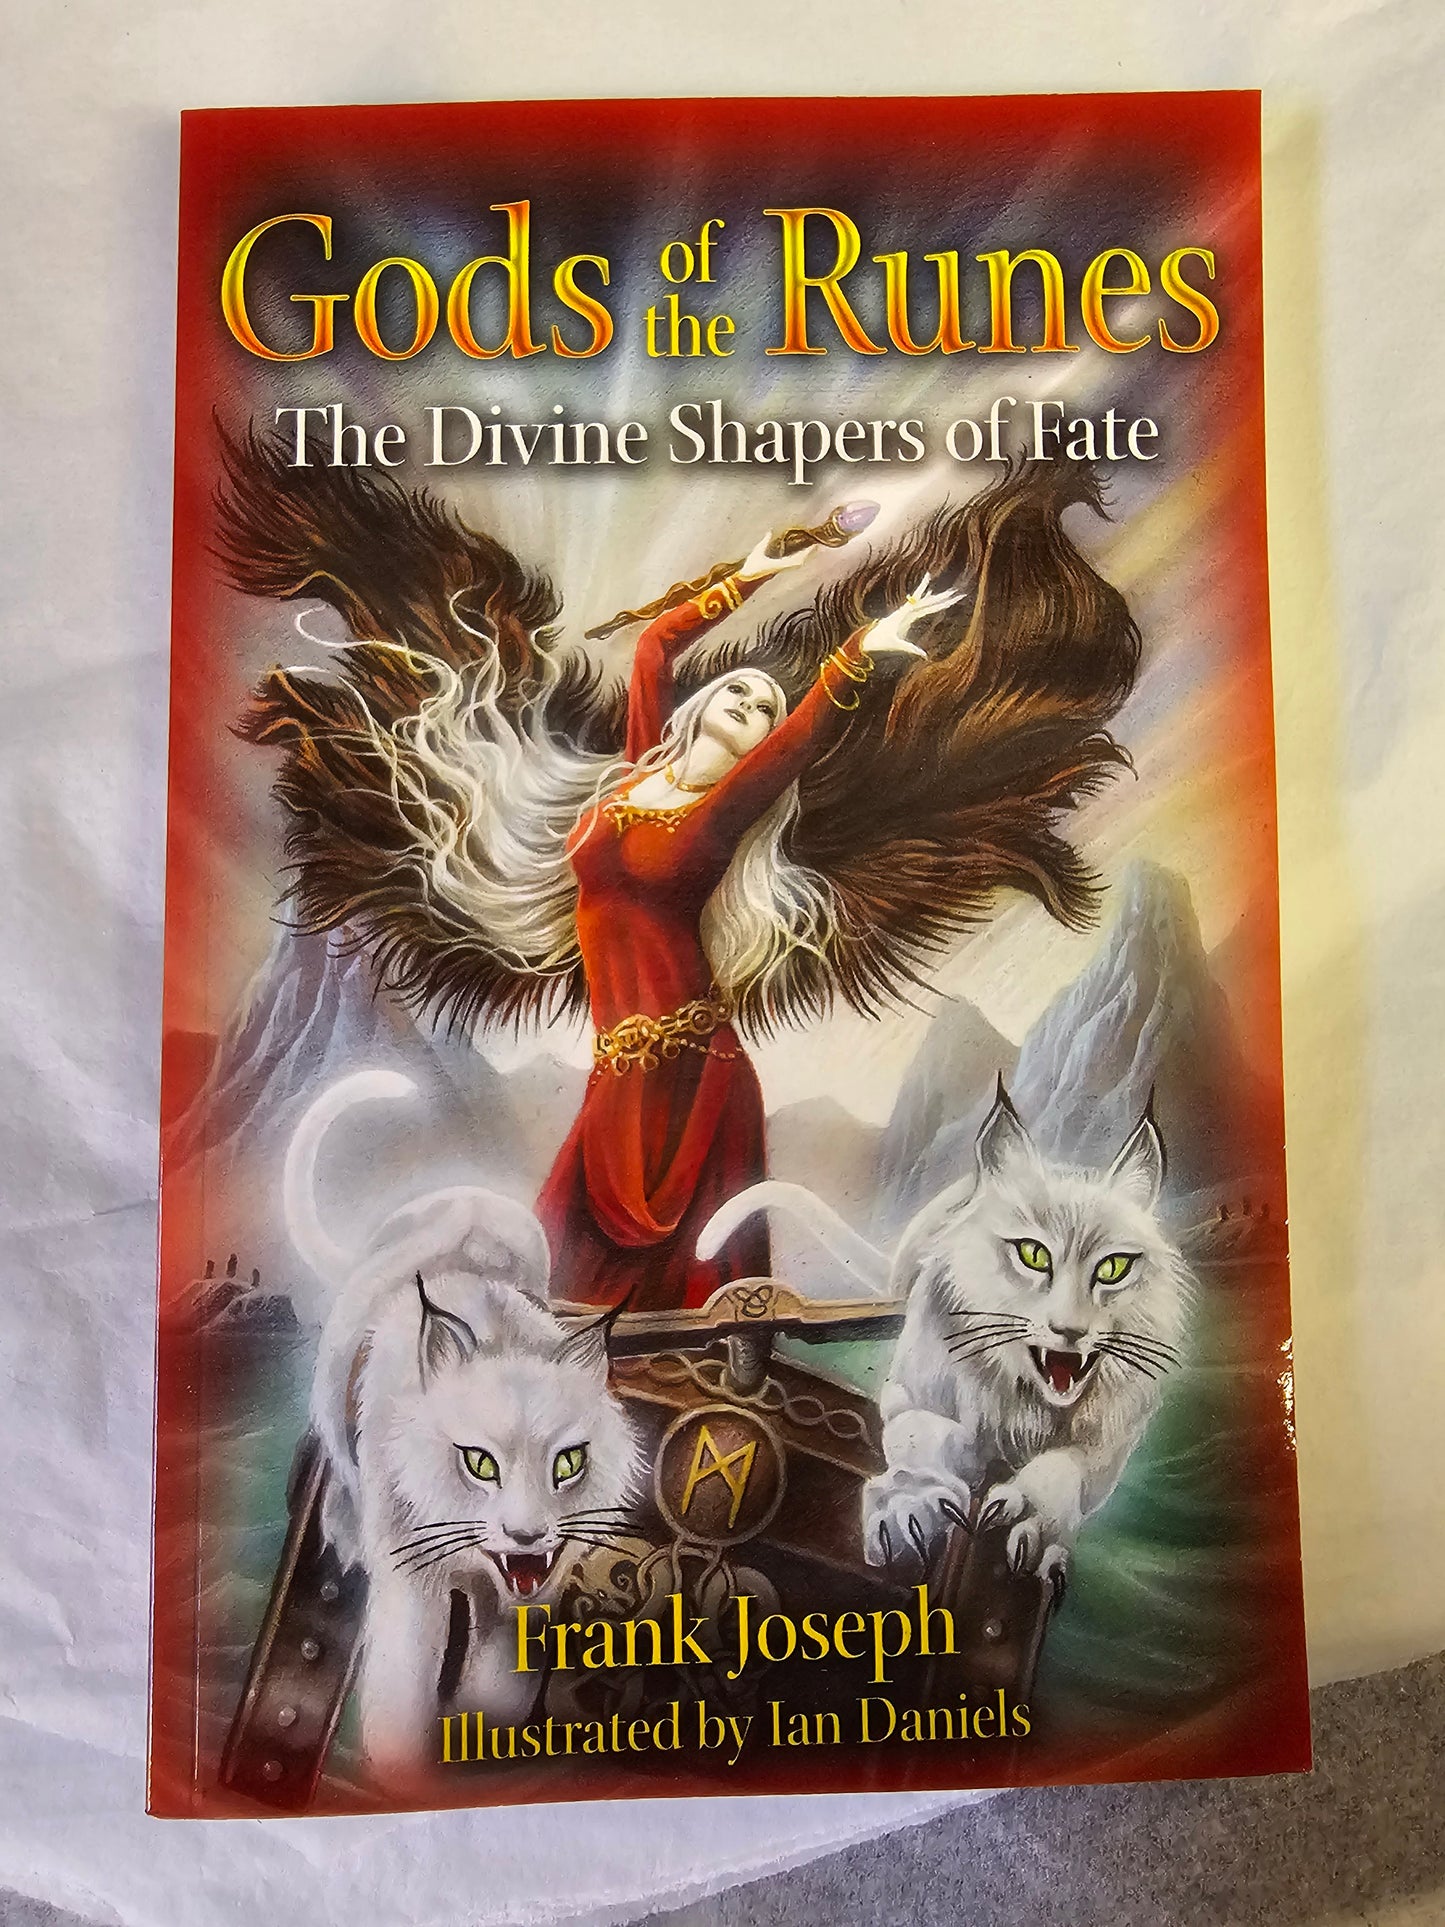 God's of the Runes